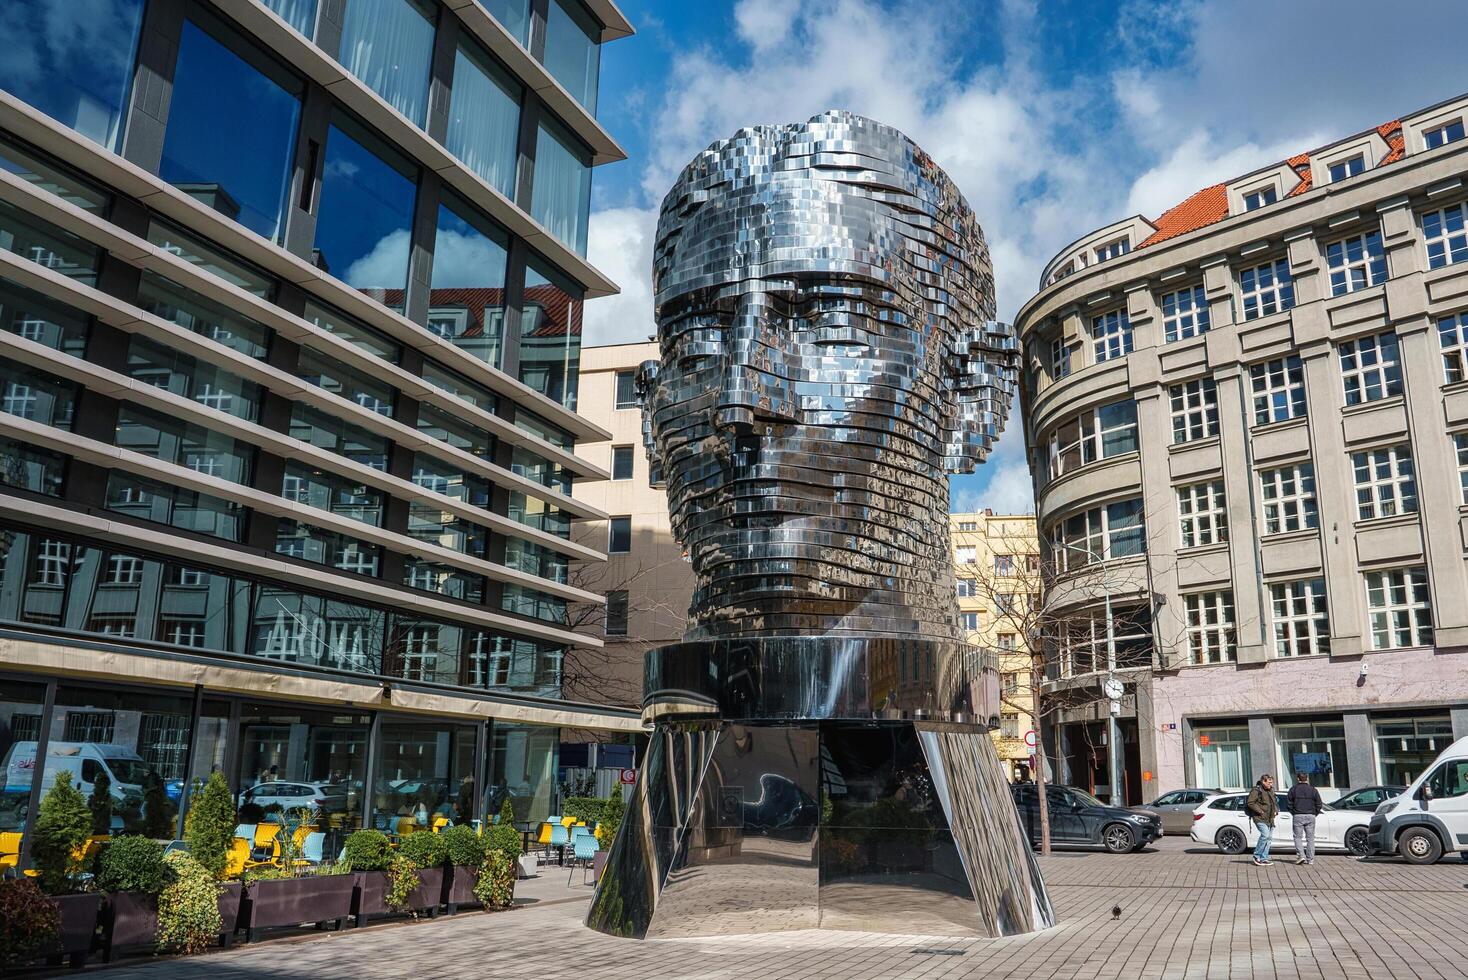 David cerny tête sculpture de Franz kafka tête dans Prague. photo